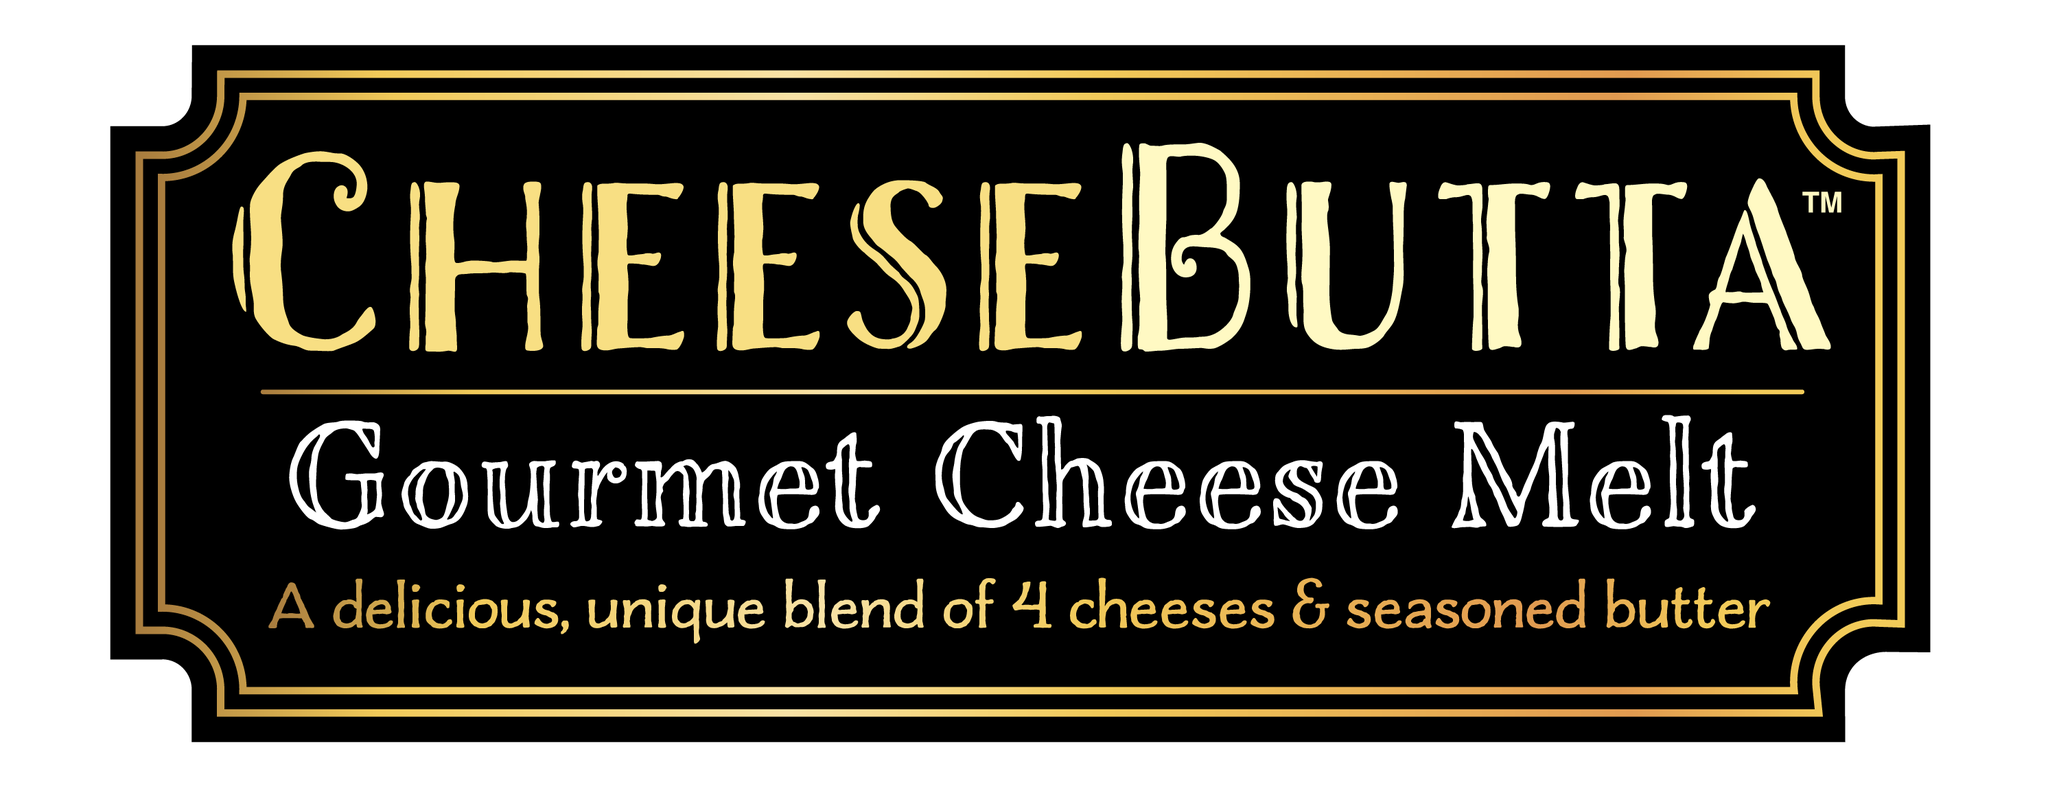 CheeseButta's Logo